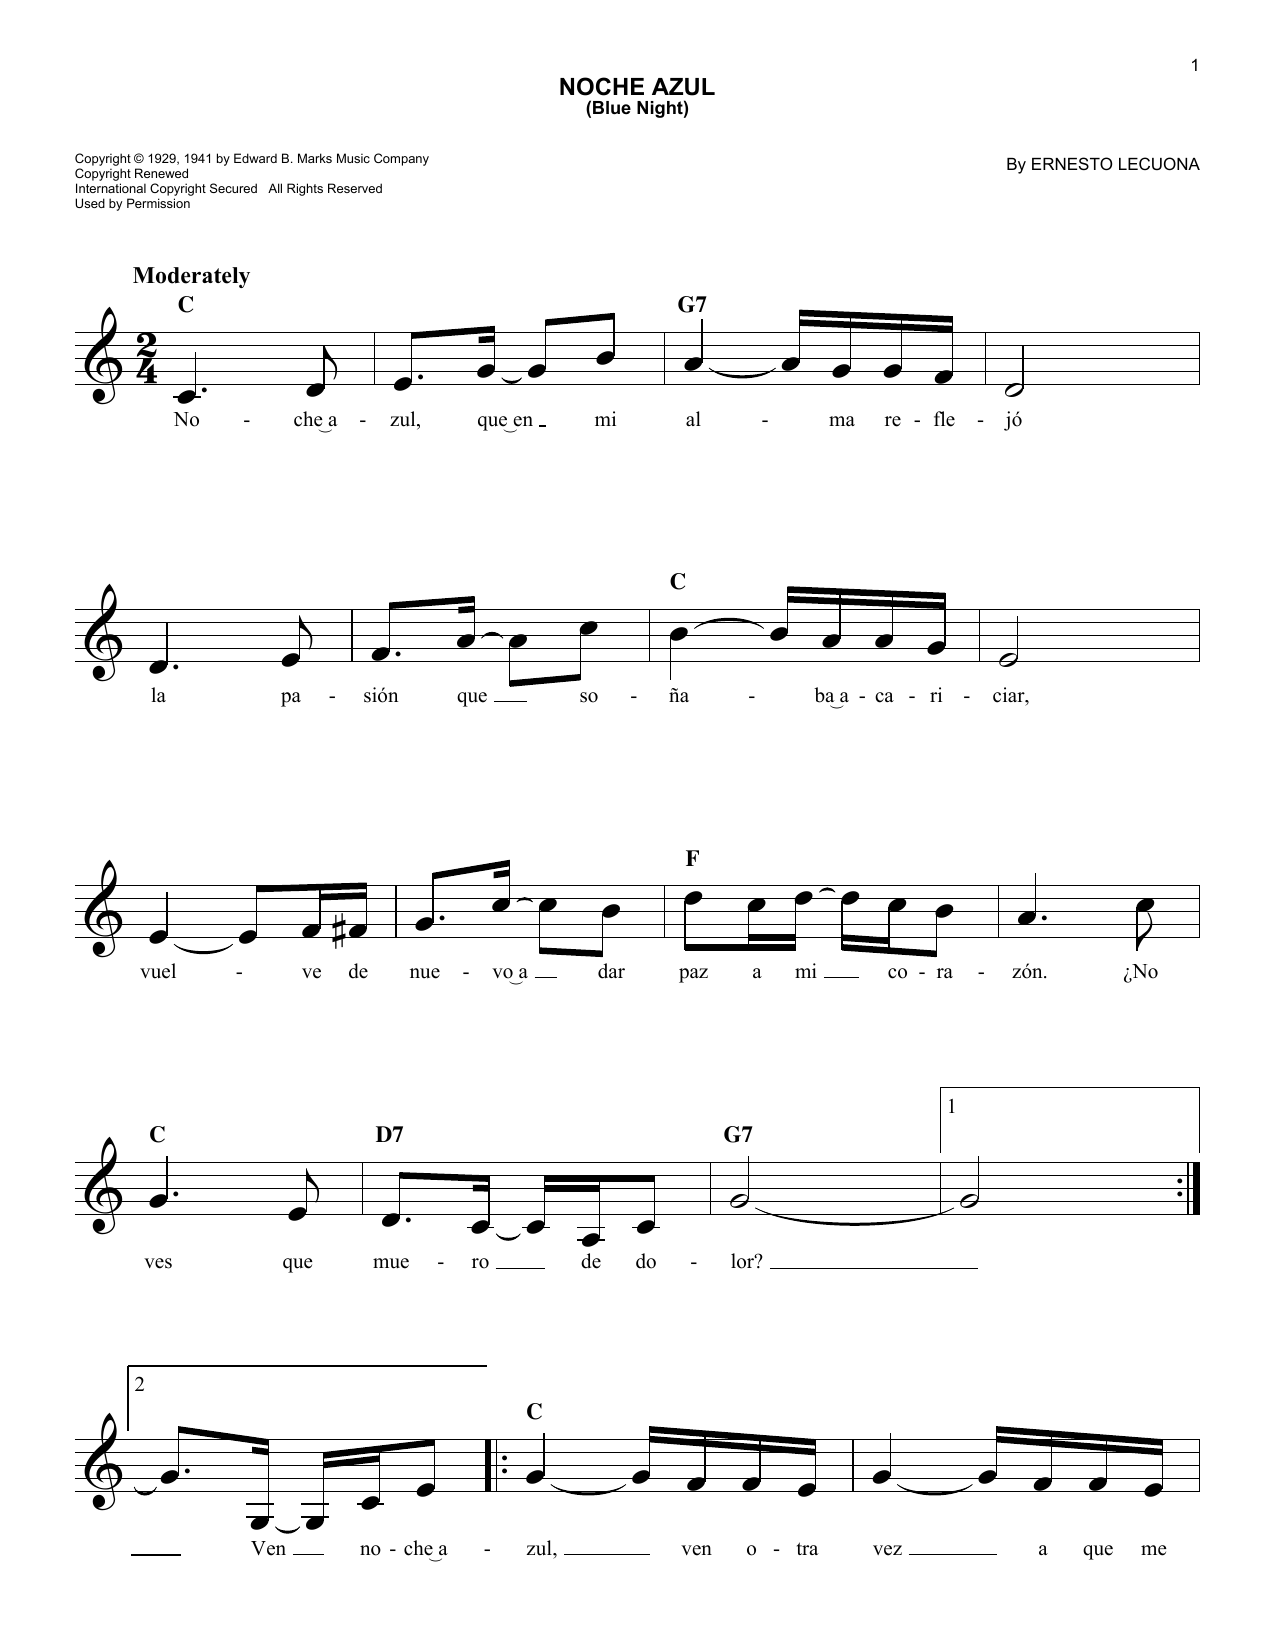 Ernesto Lecuona Noche Azul (Blue Night) Sheet Music Notes & Chords for Melody Line, Lyrics & Chords - Download or Print PDF